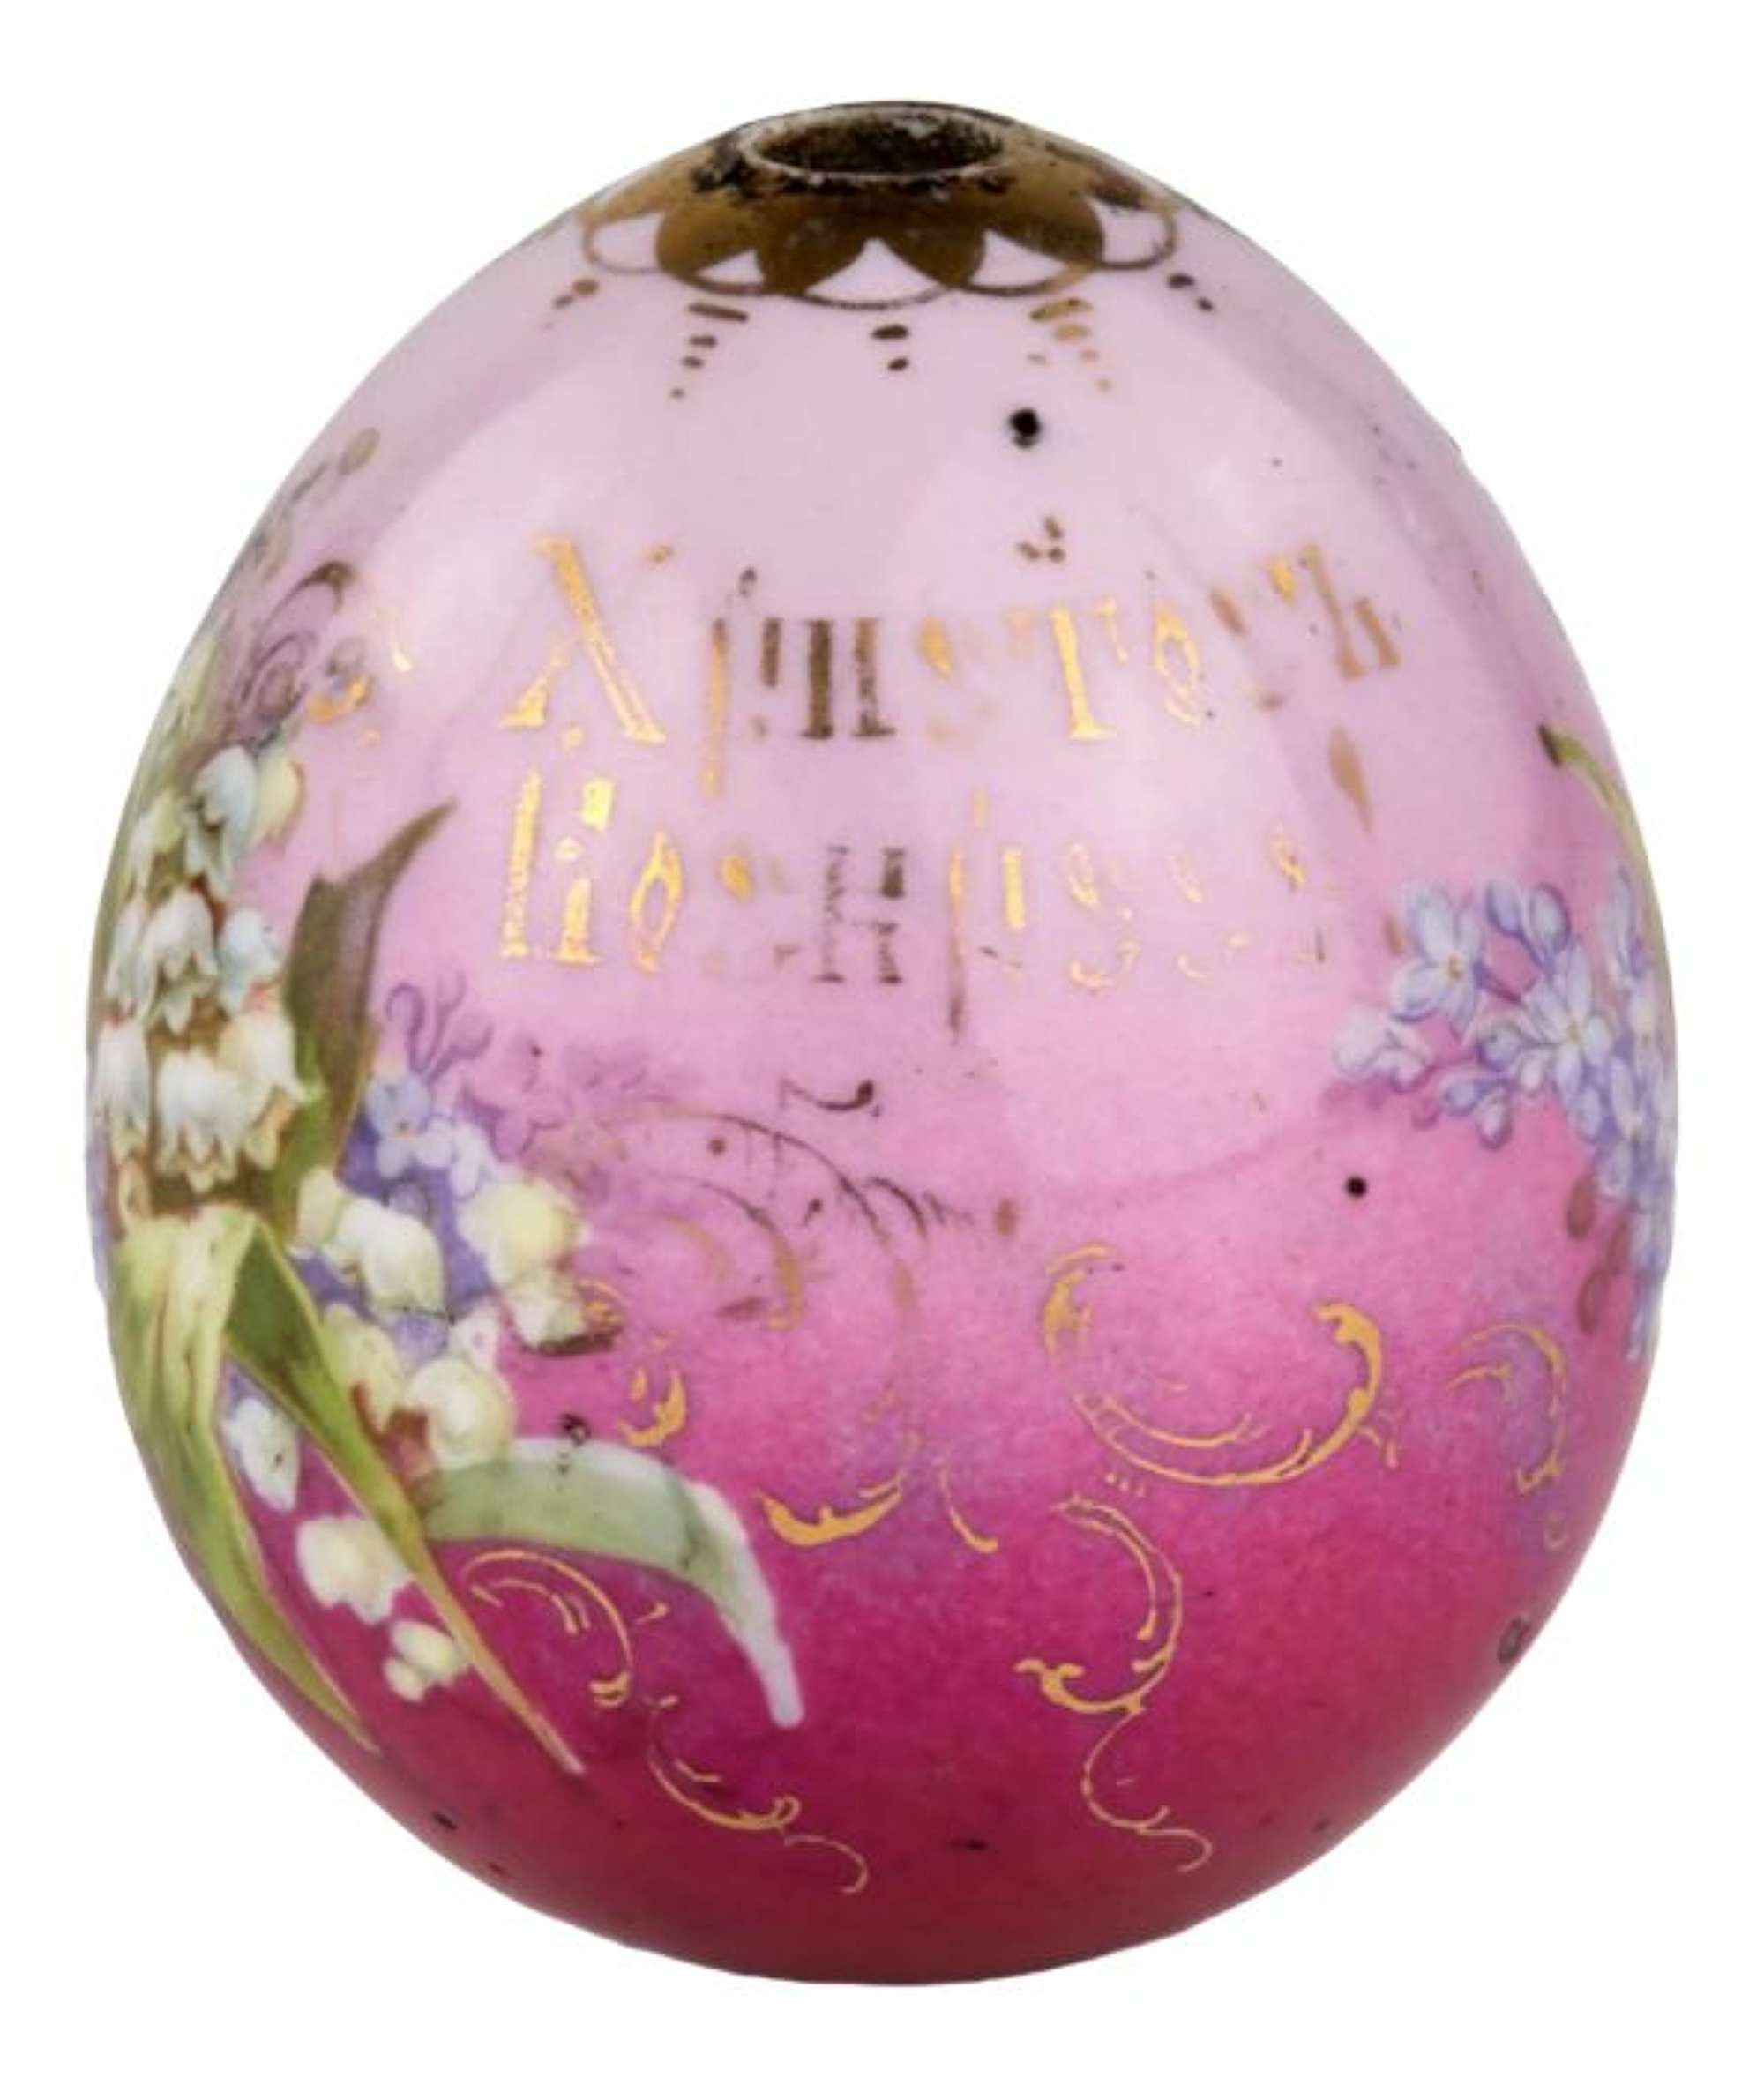 Painted Porcelain Easter Egg